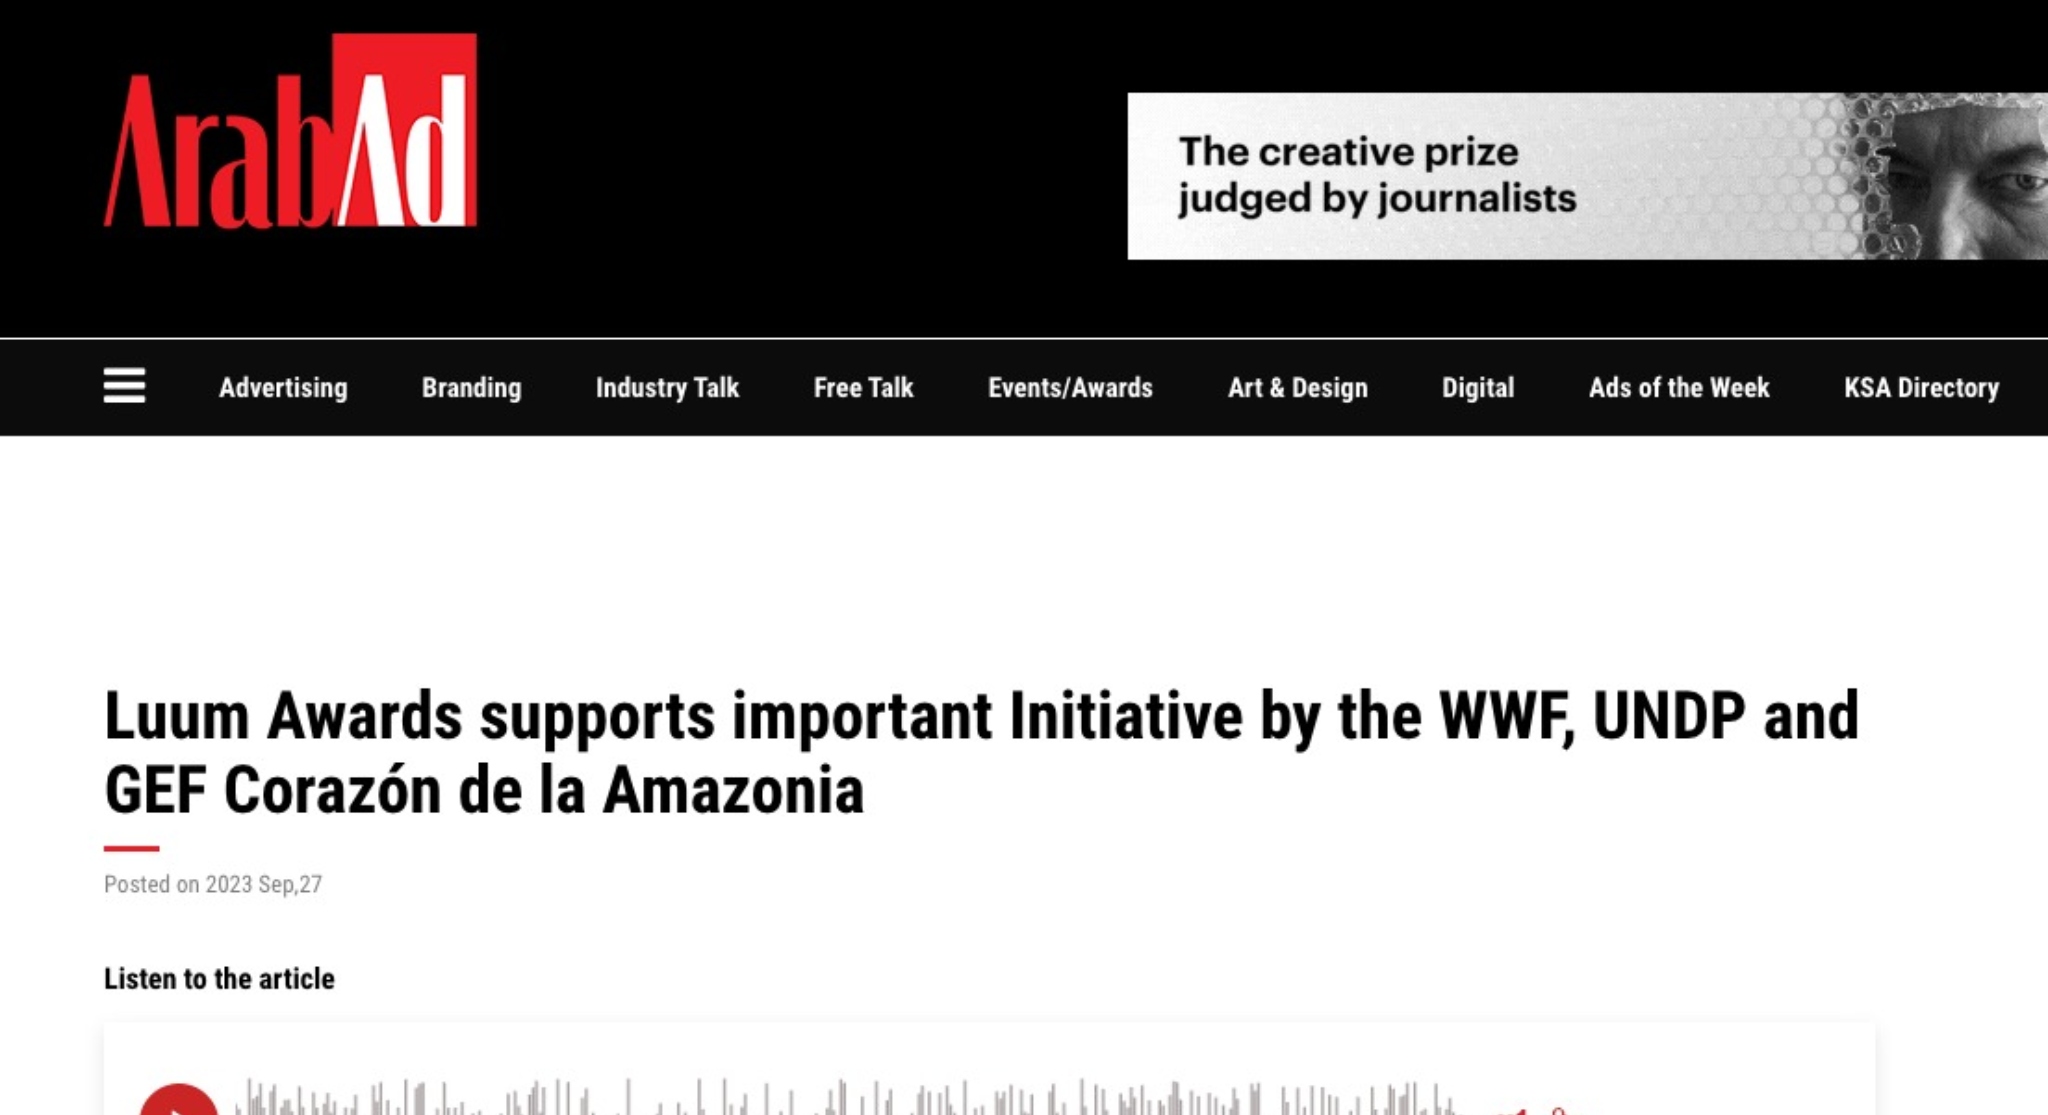 Luum Awards supports important Initiative by the WWF, UNDP and GEF Corazón de la Amazonia